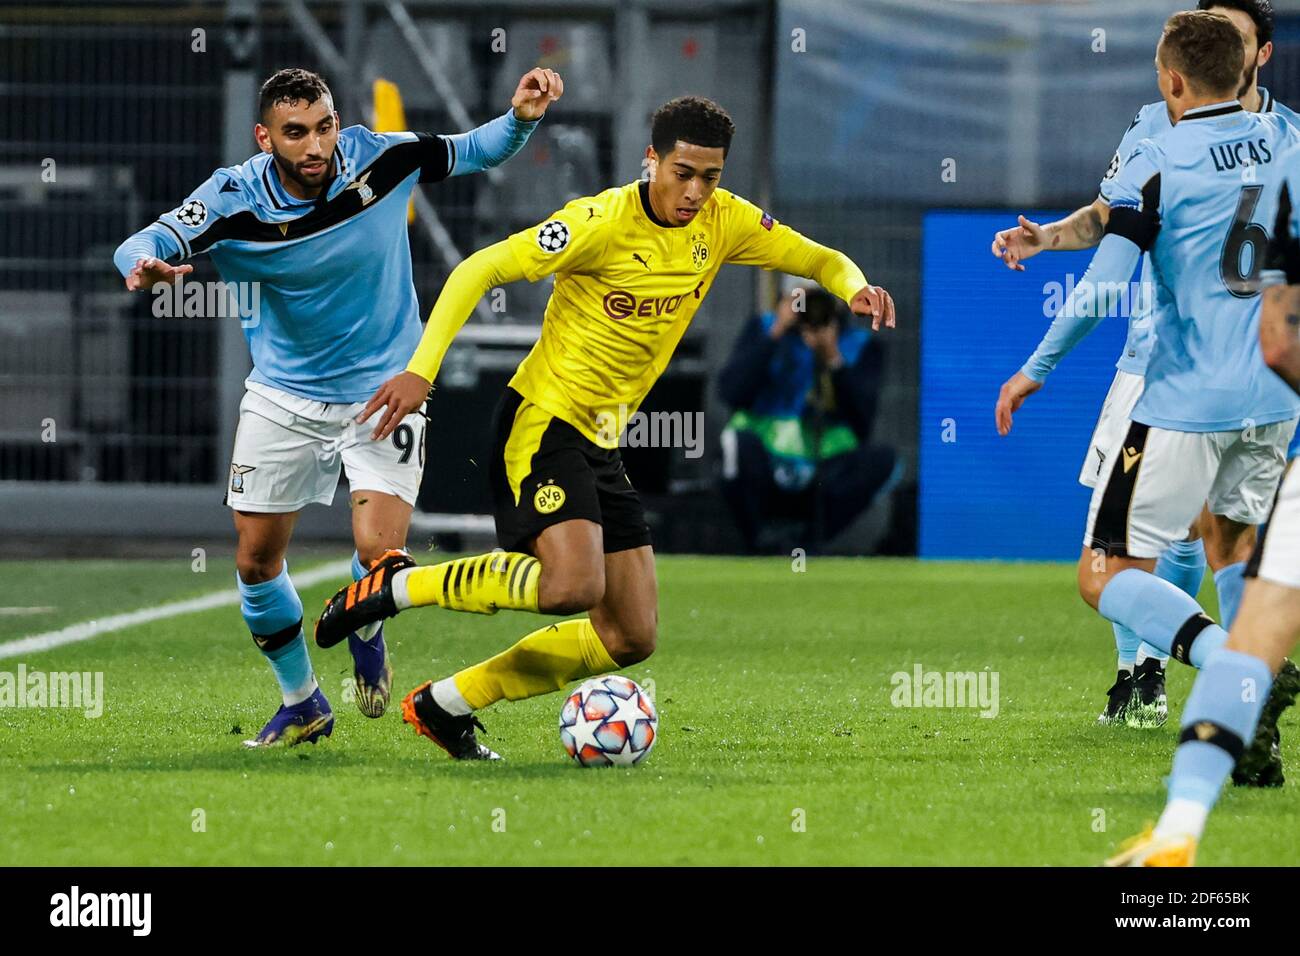 Dortmund, Signal-Iduna-Park, 02.12.20: Jude Bellingham (Dortmund) im Zweikampf mit Mohamed Fares (Rom) im Championsleague Spiel Borussia Dortmund vs. Stockfoto